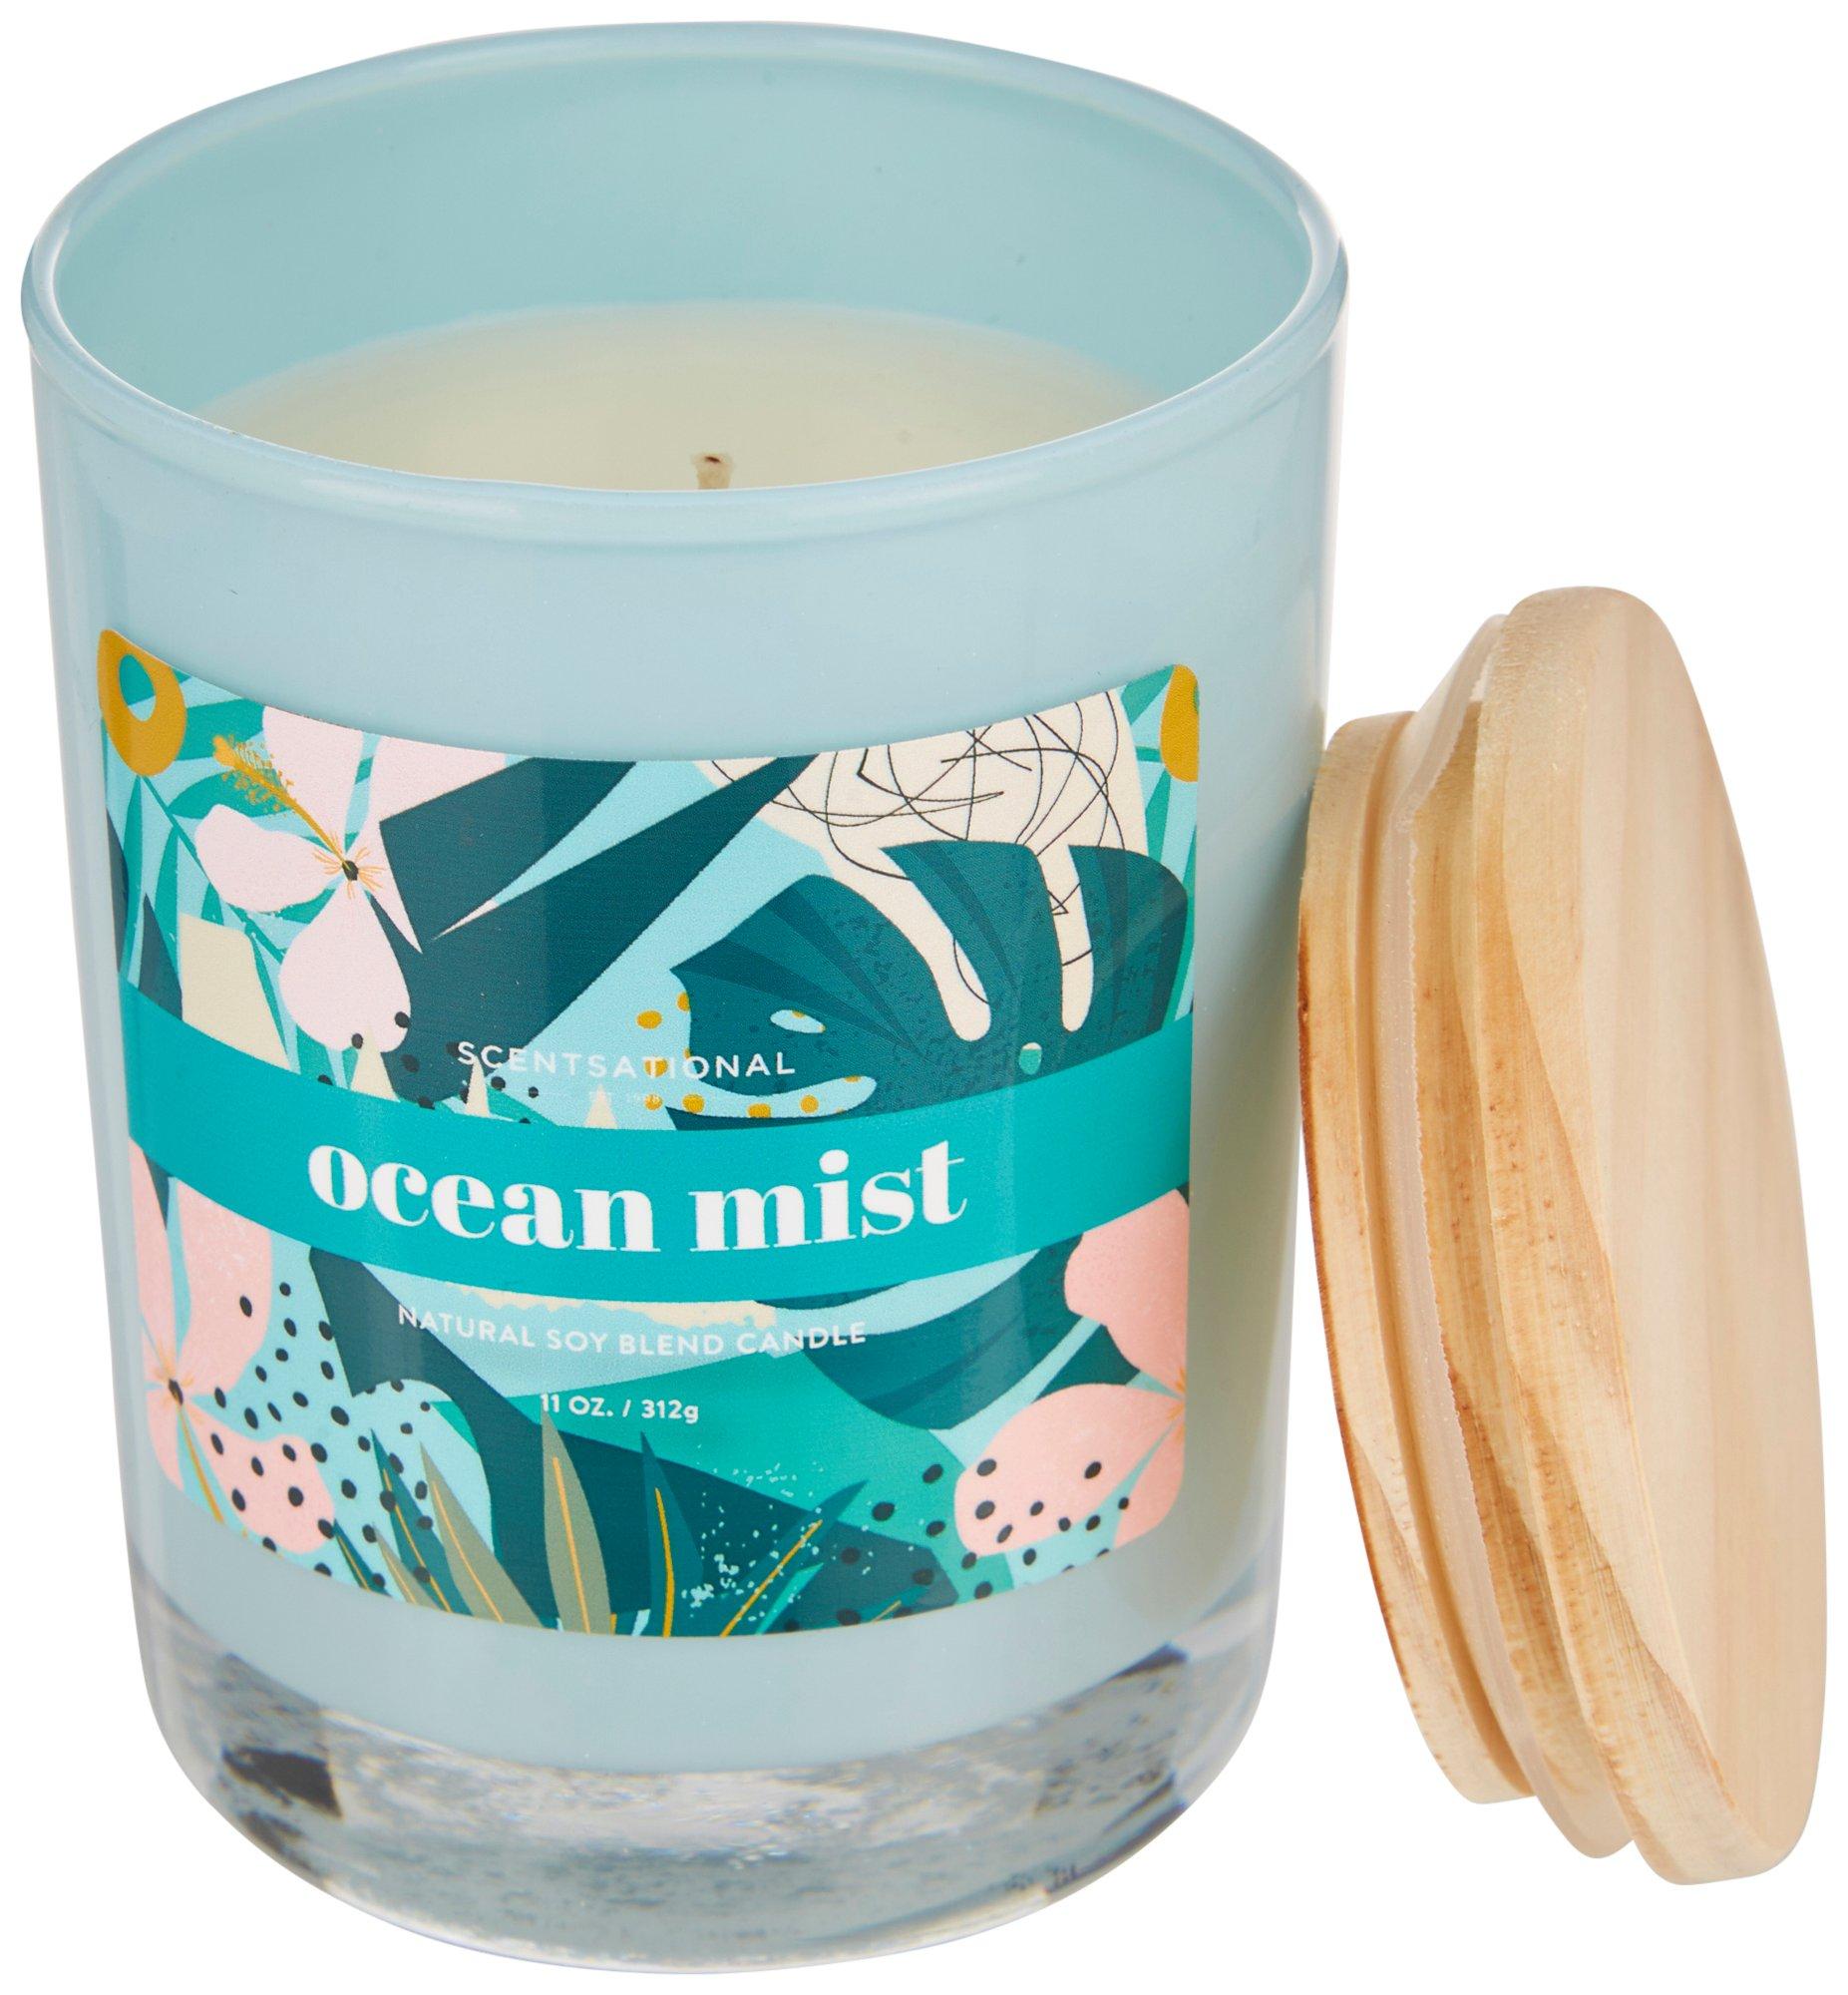 Scentsational 11 oz. Ocean Mist Soy Blend Candle